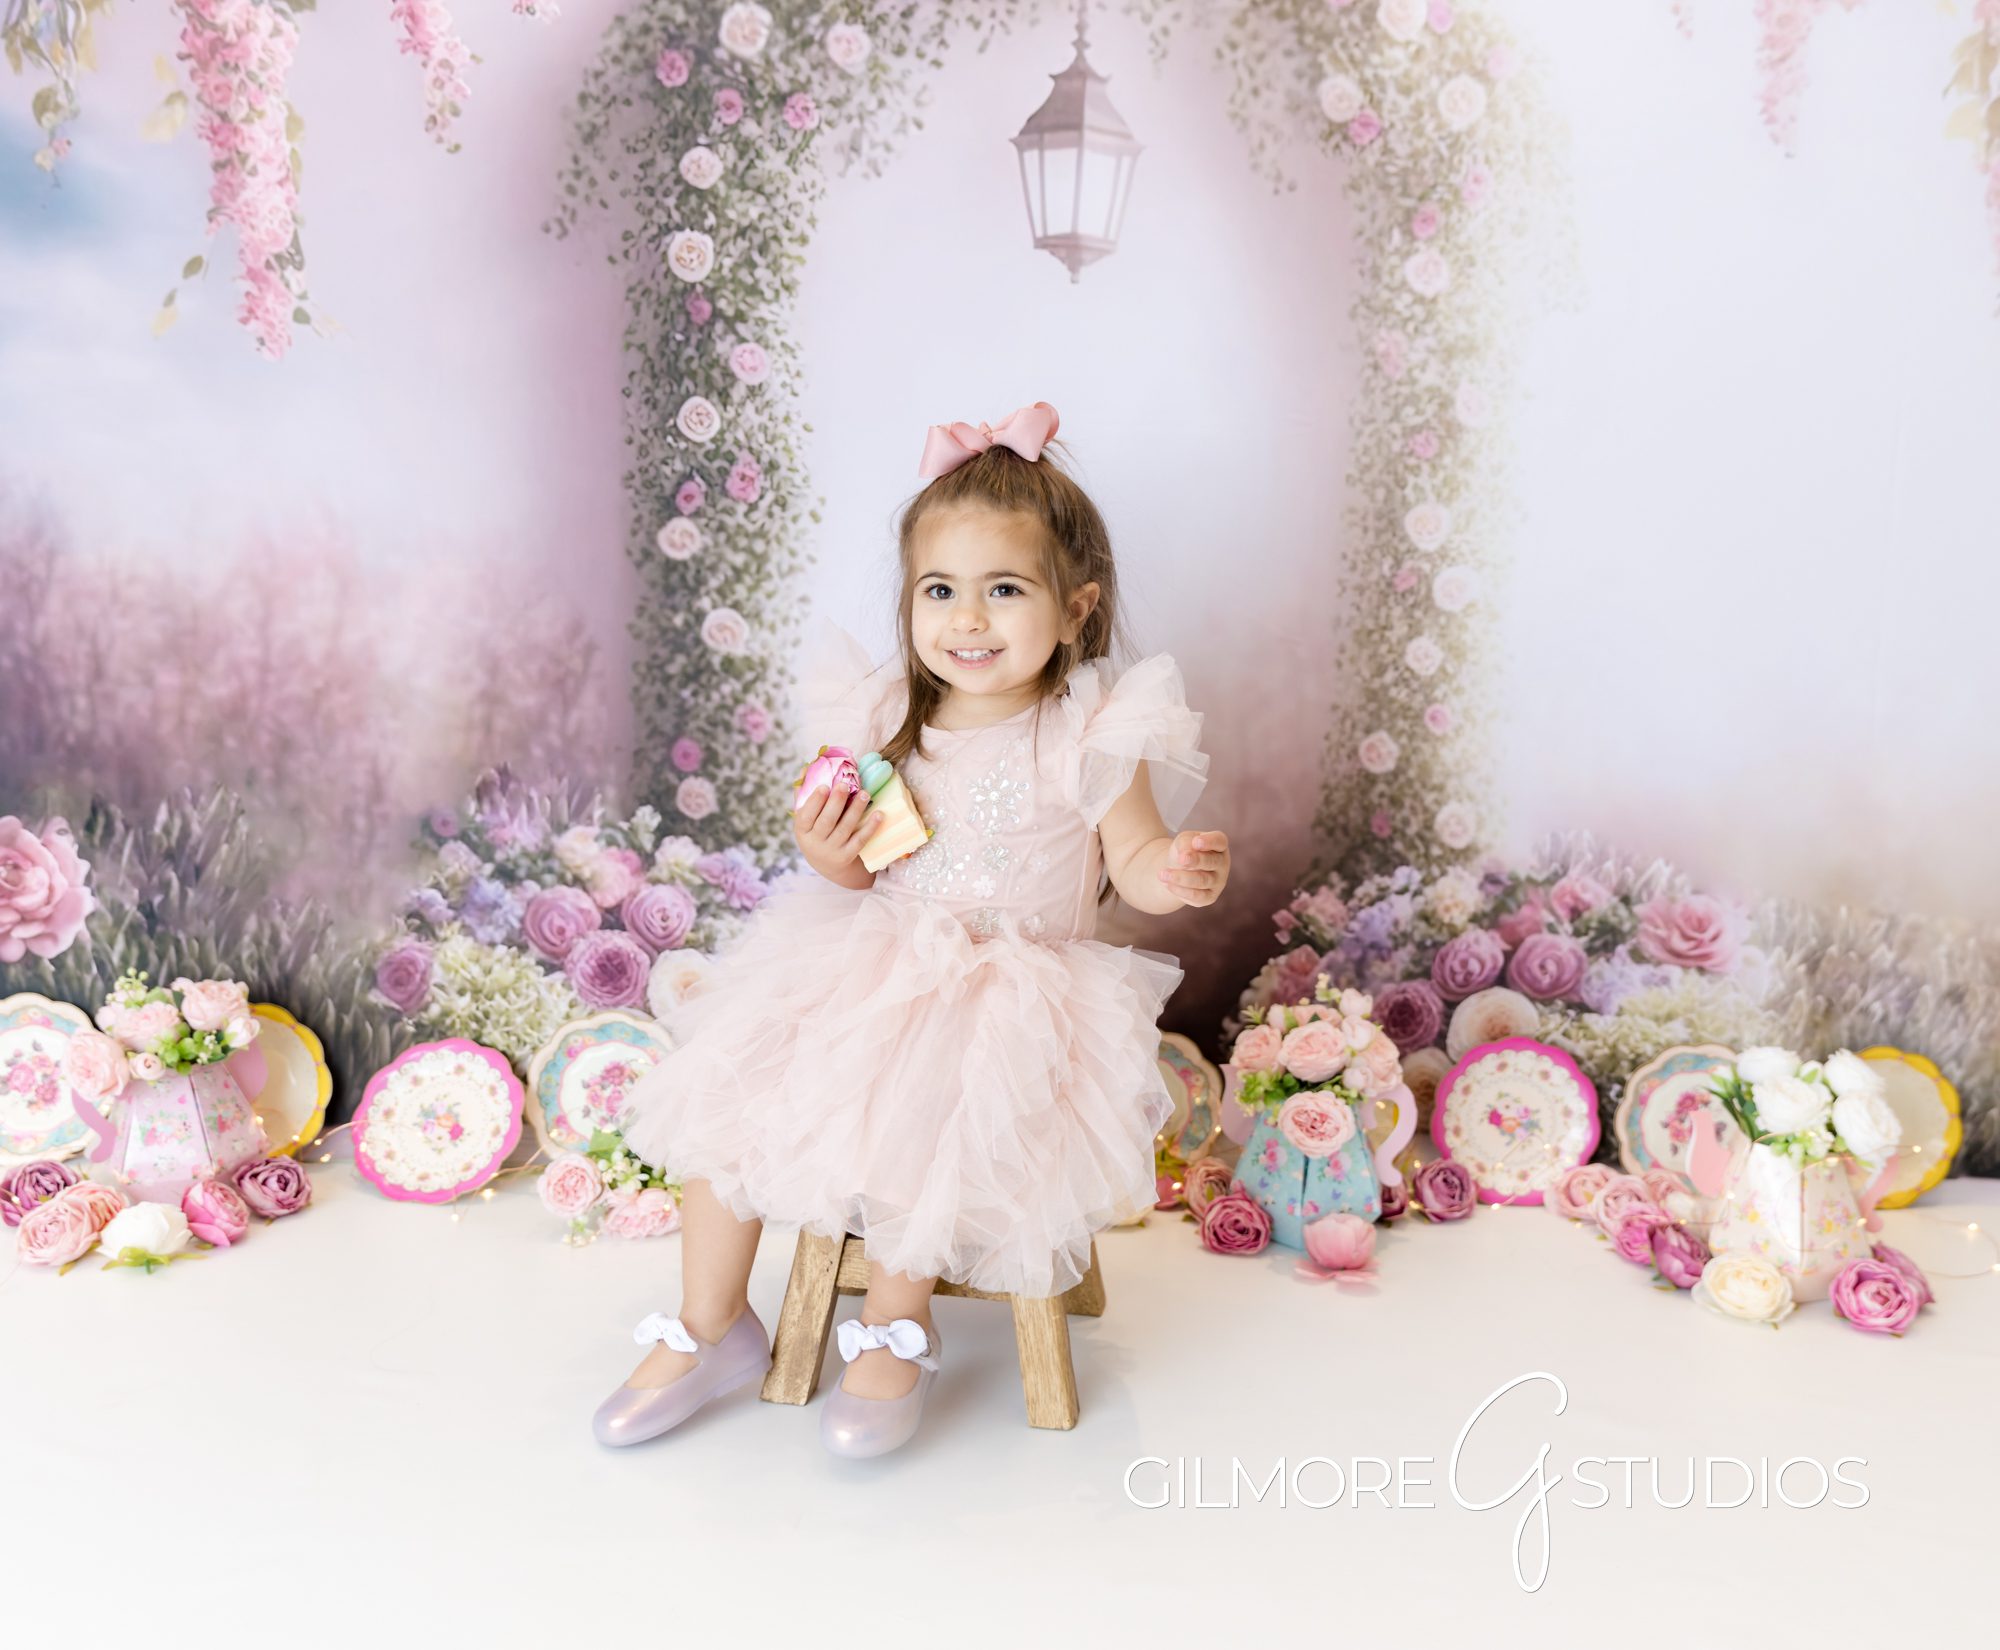 tea party cake smash, pink dress, little girl, sweets, gilmore studios, little girl poses